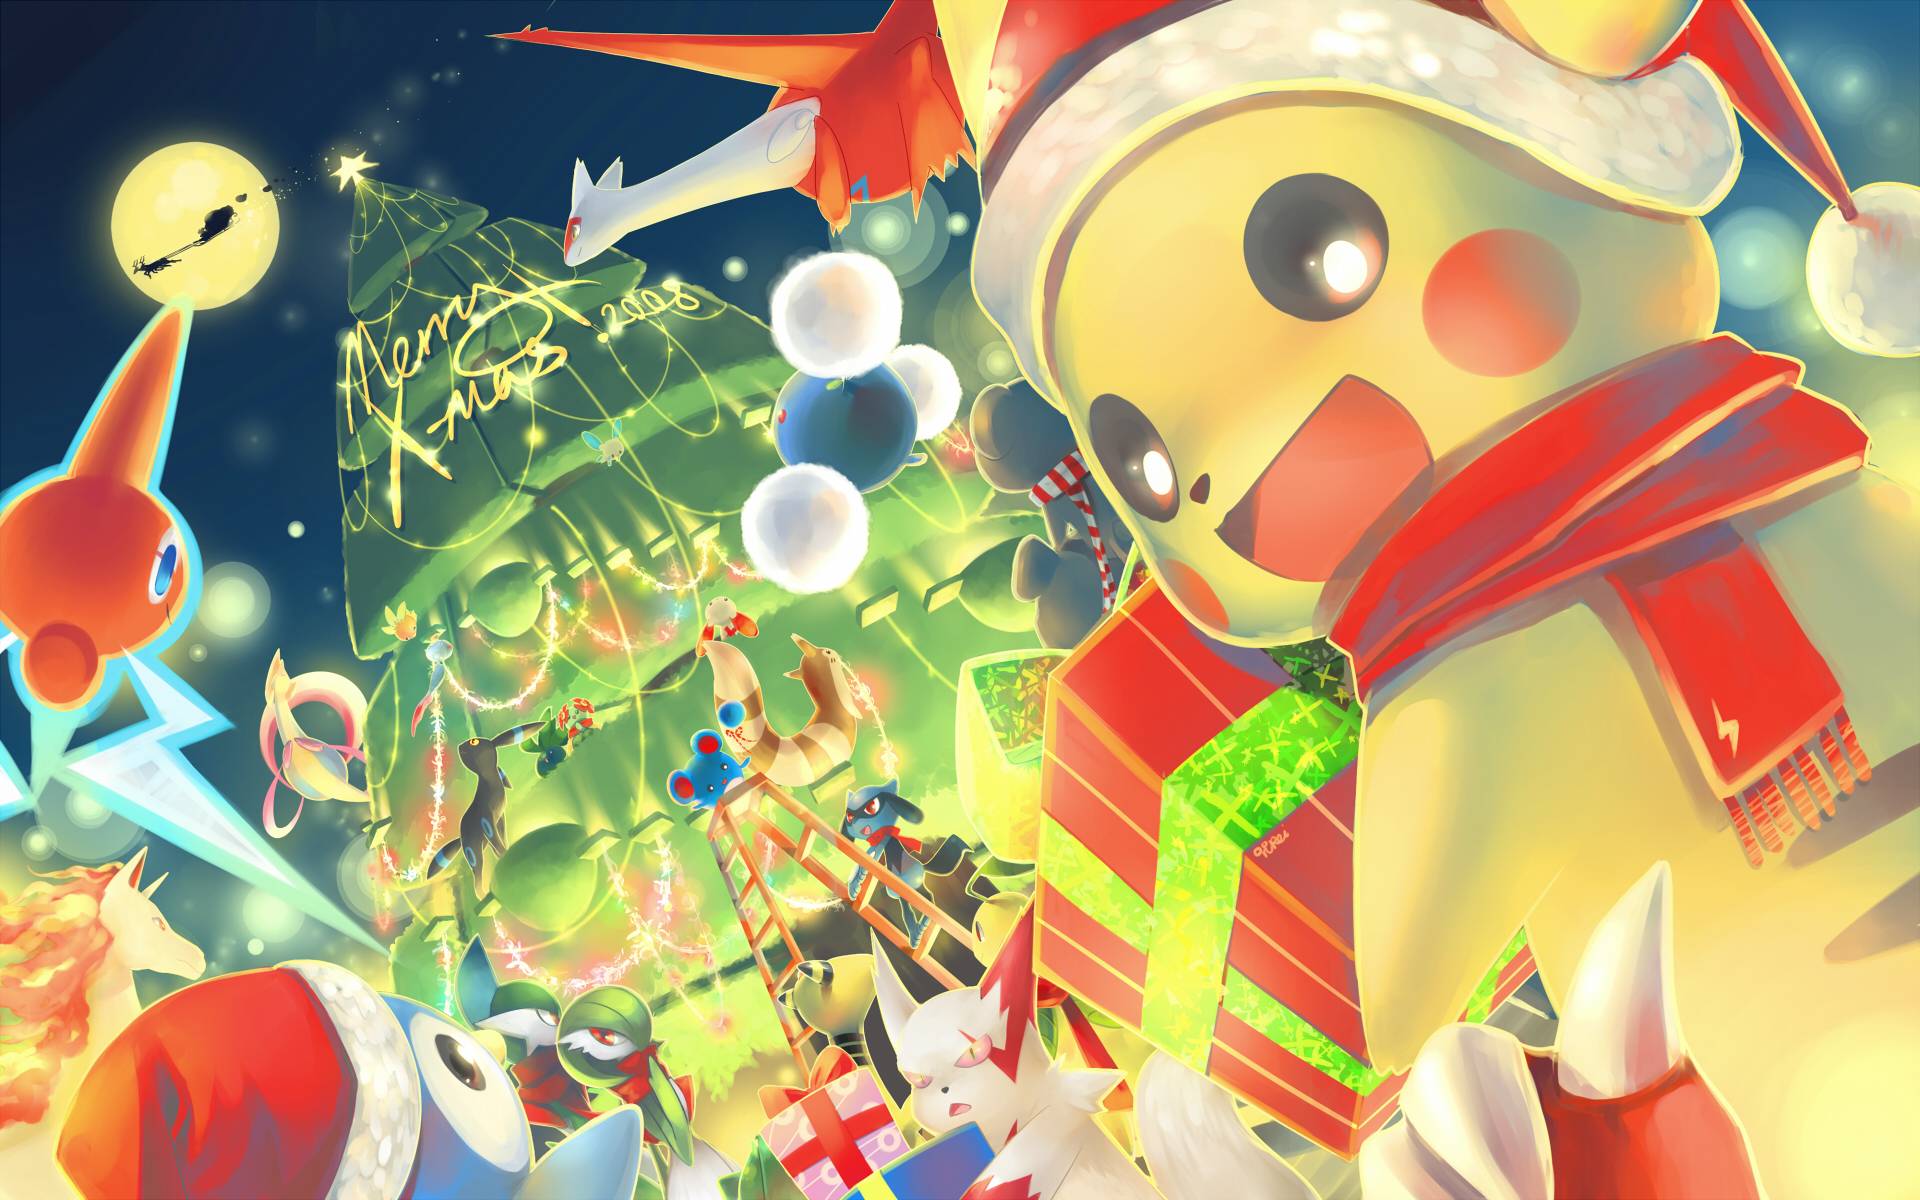 Pokemon Christmas Wallpapers Wallpaper Cave